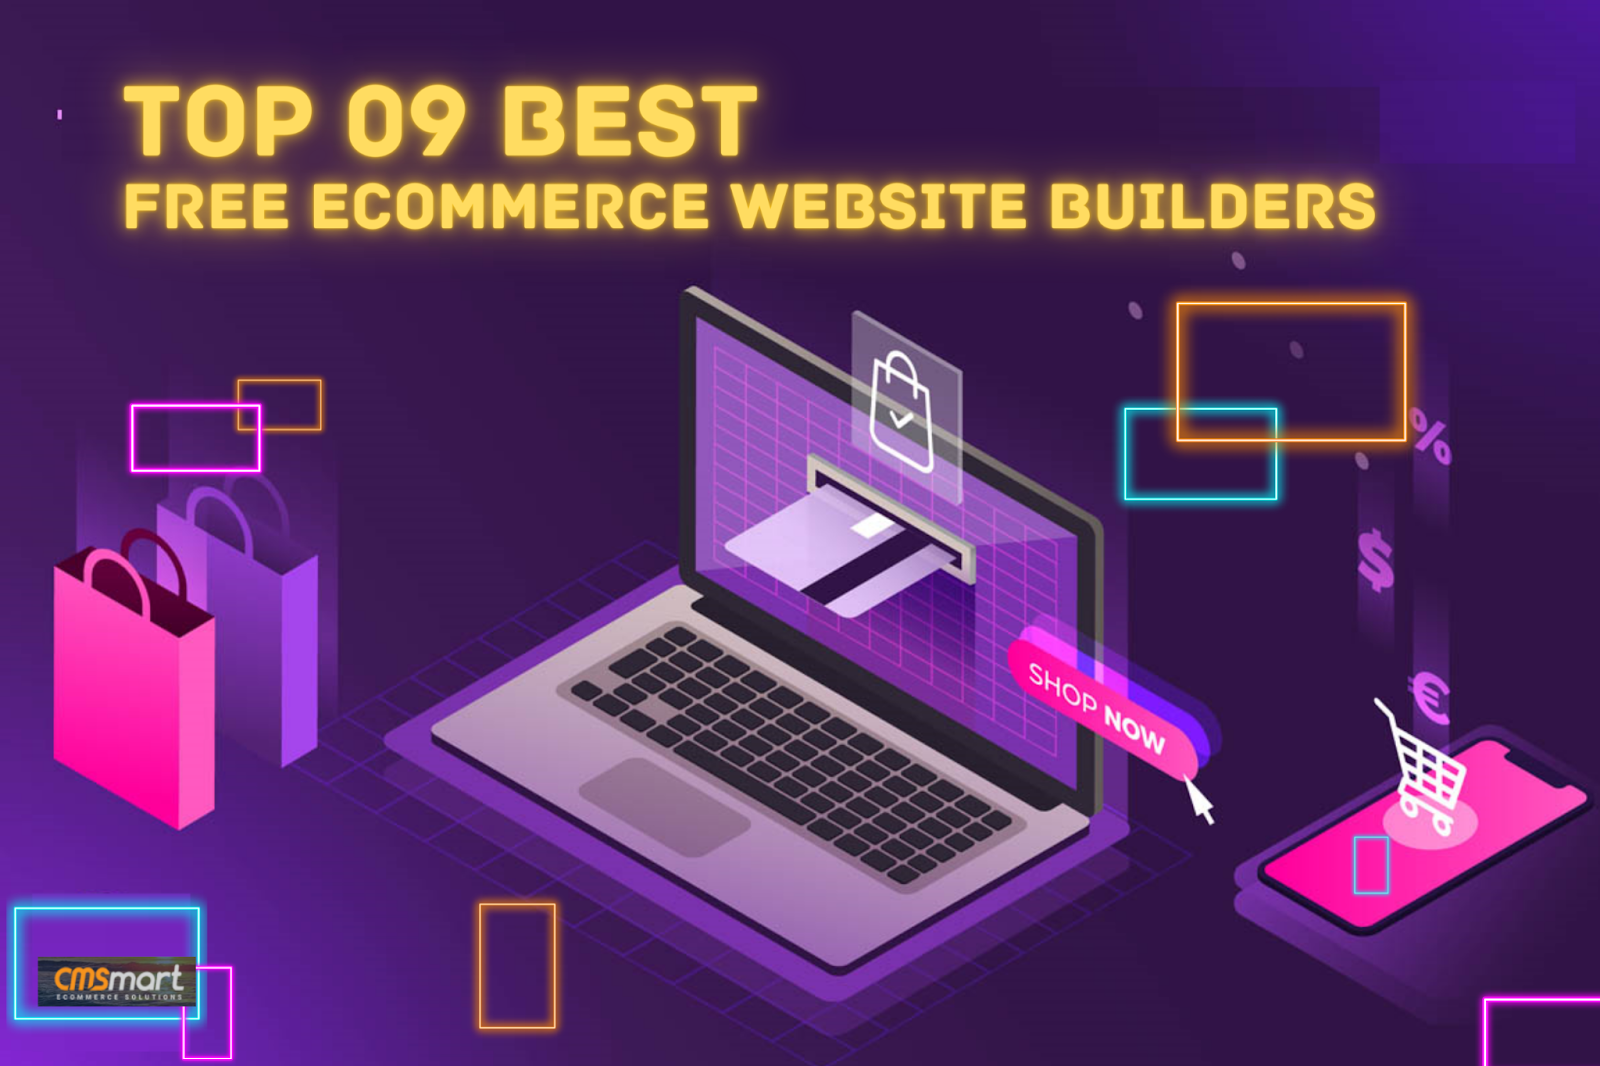 Compare Top 09 Best Free Ecommerce Website Builders Part 1